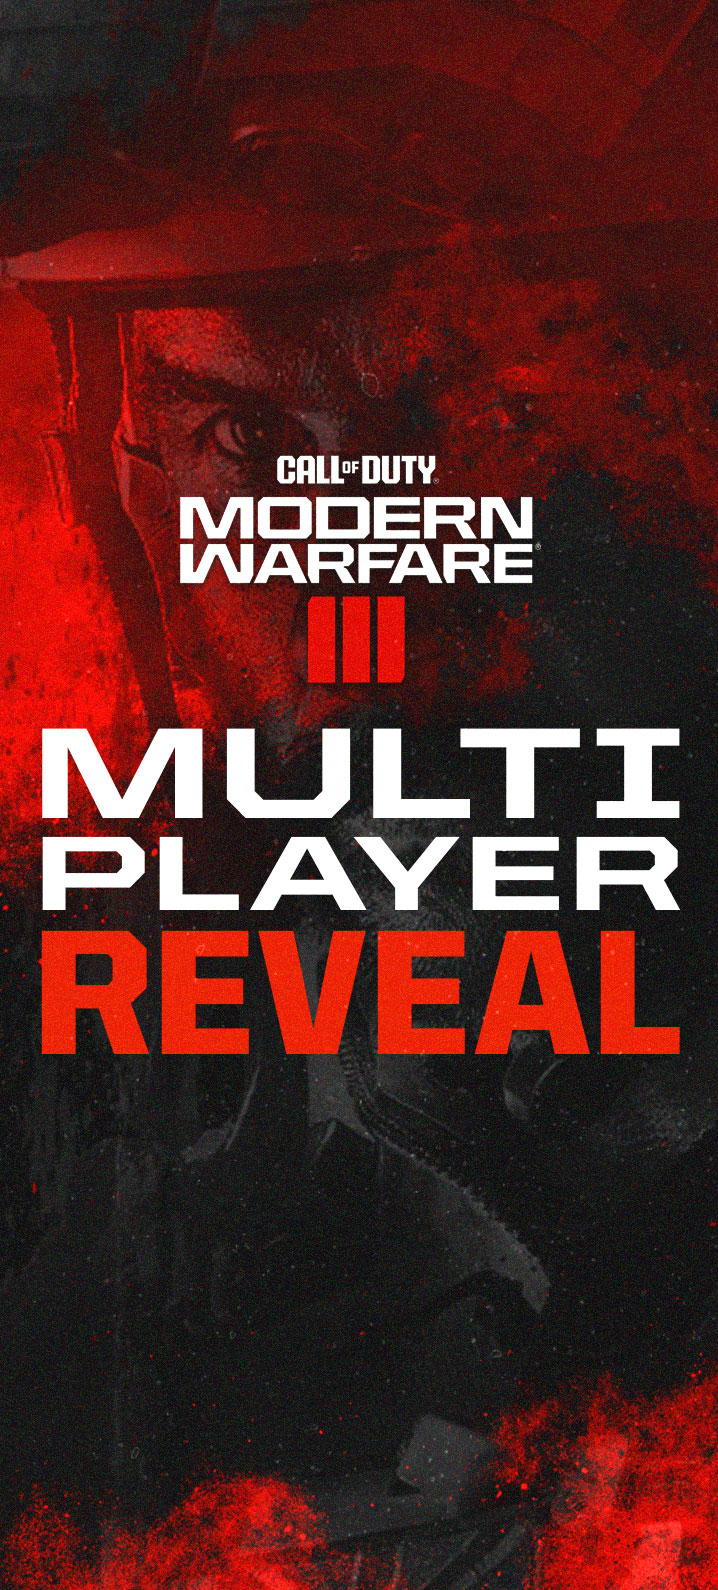 Modern Warfare 3 multiplayer reveal trailer thumbnail